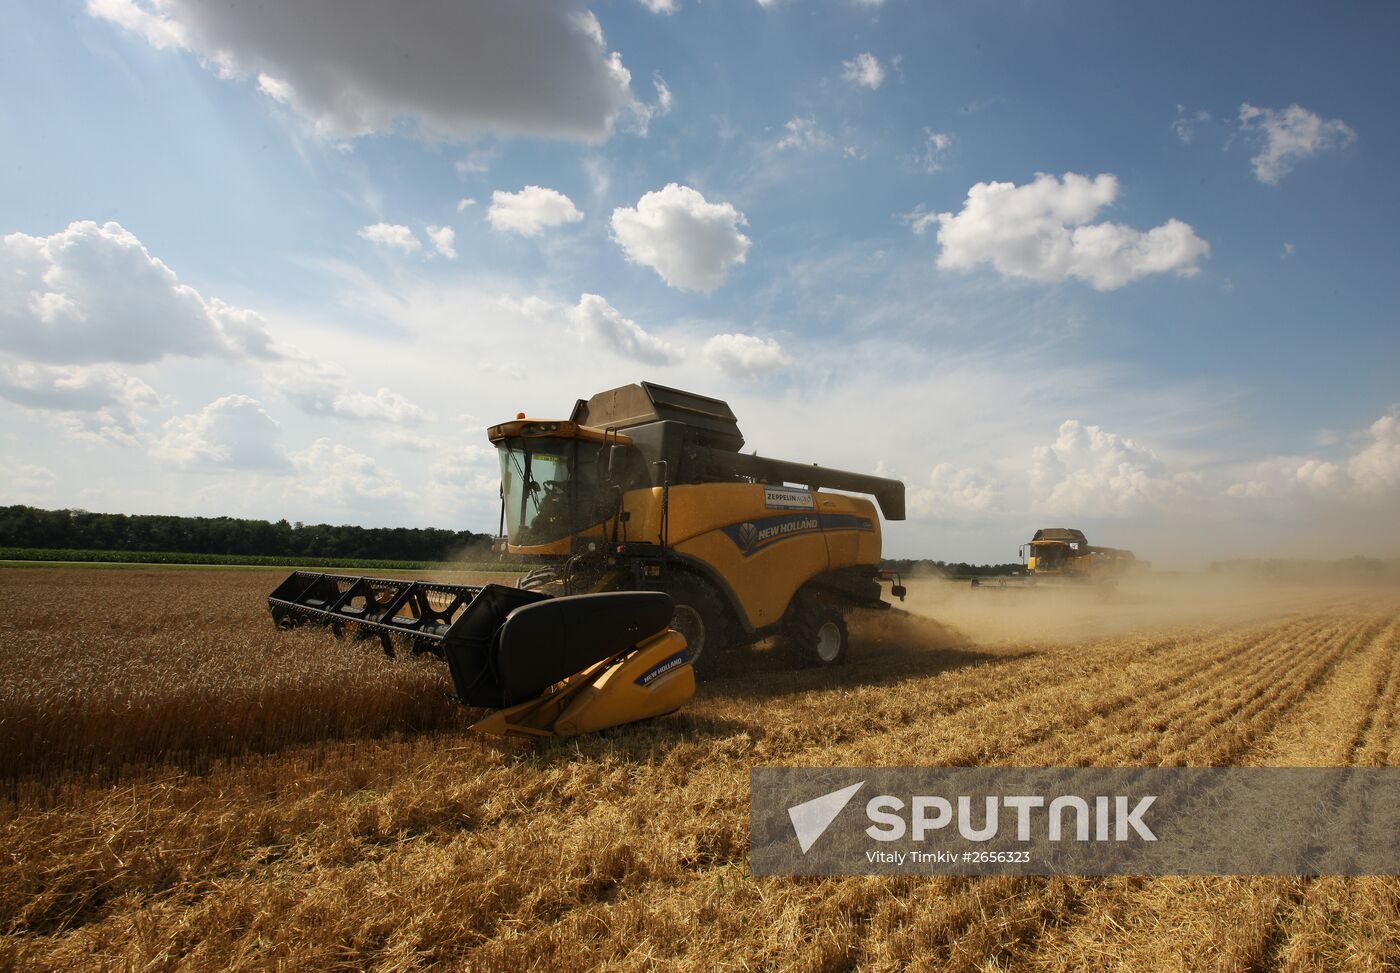 Grain harvest in Russia's south